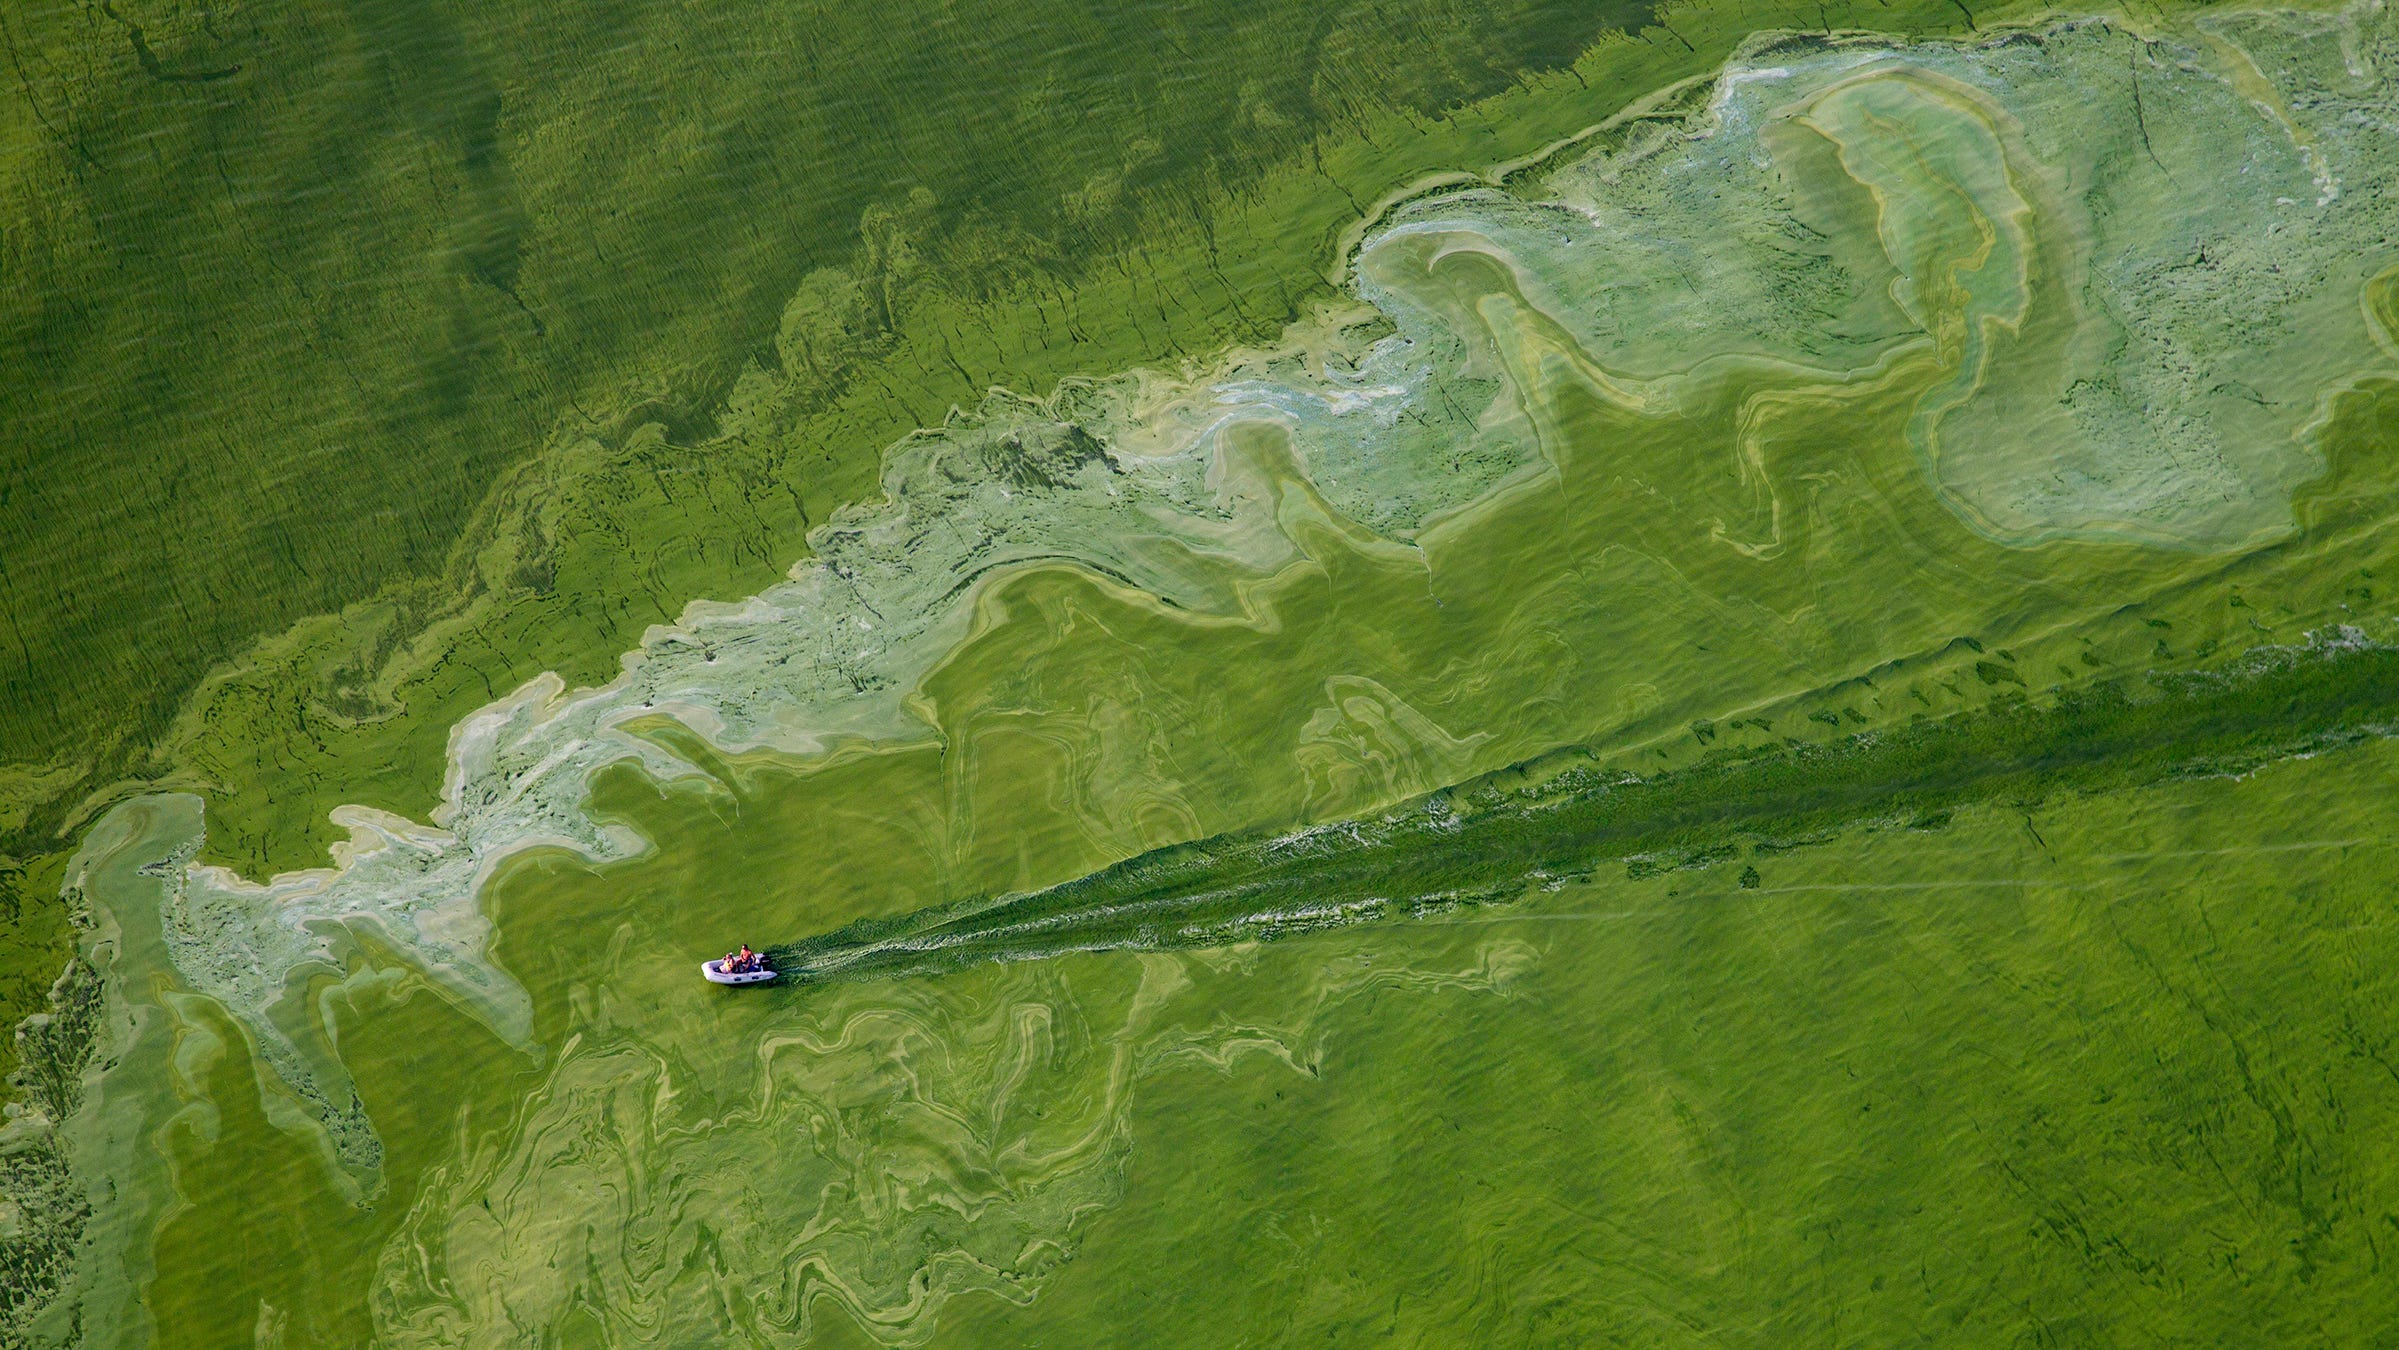 Toxic algae cocktail brews in Lake Erie